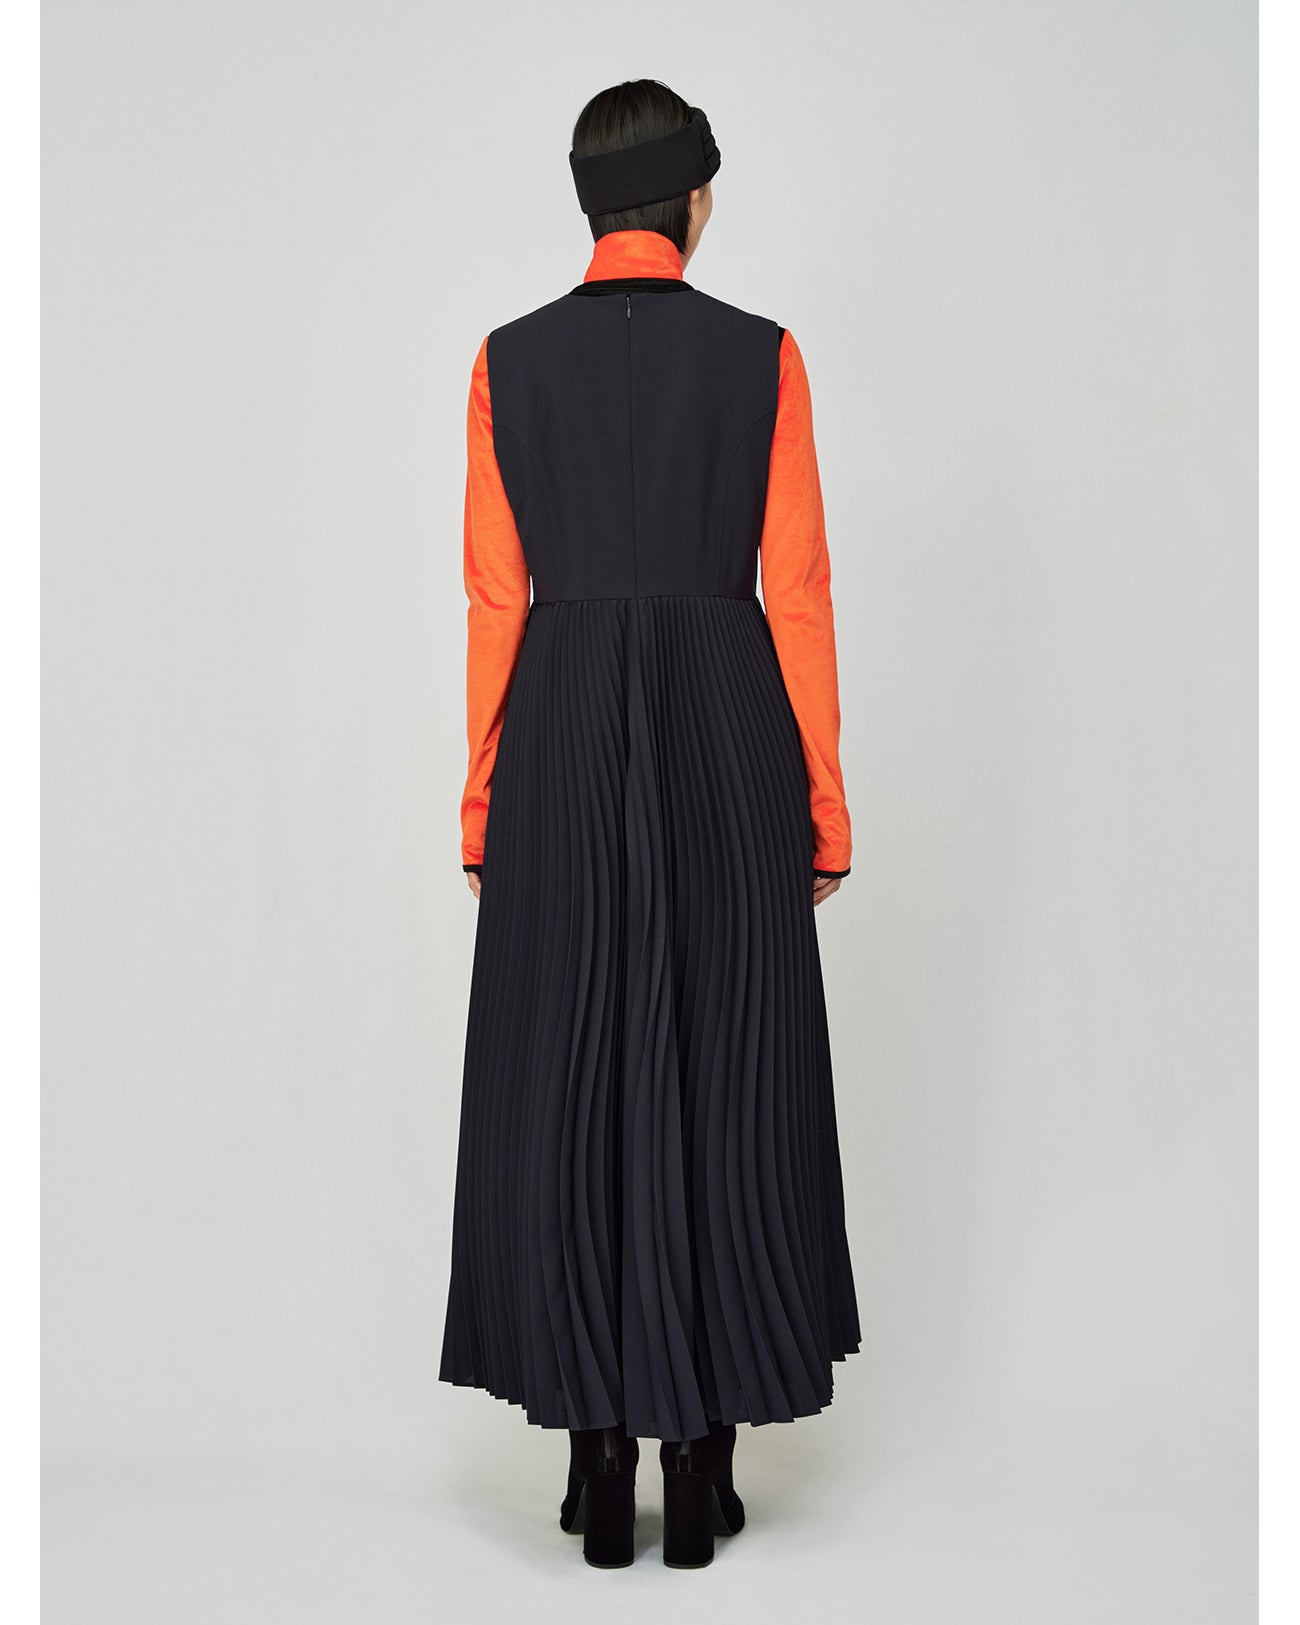 Curved Pleated Sleeveless Dress - khaki - Mame Kurogouchi